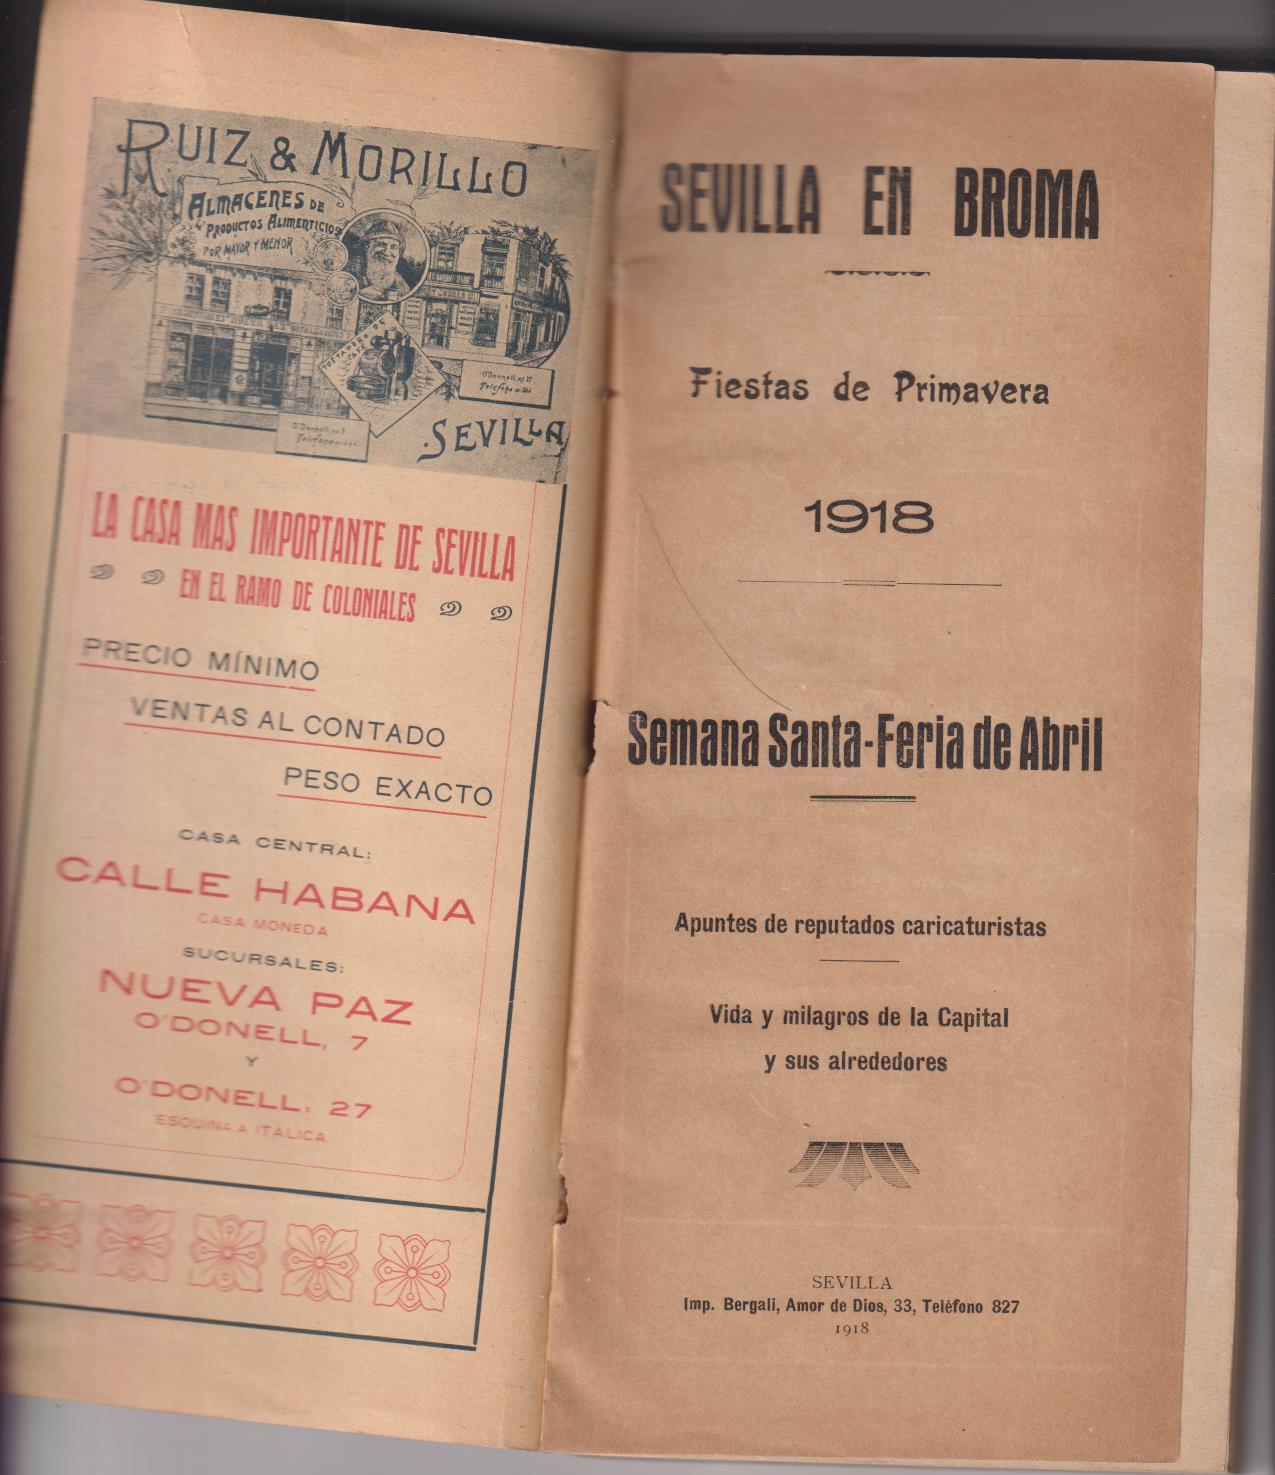 Sevilla en Broma. Fiestas de Primavera 1918. Semana Santa-Feria de Abril